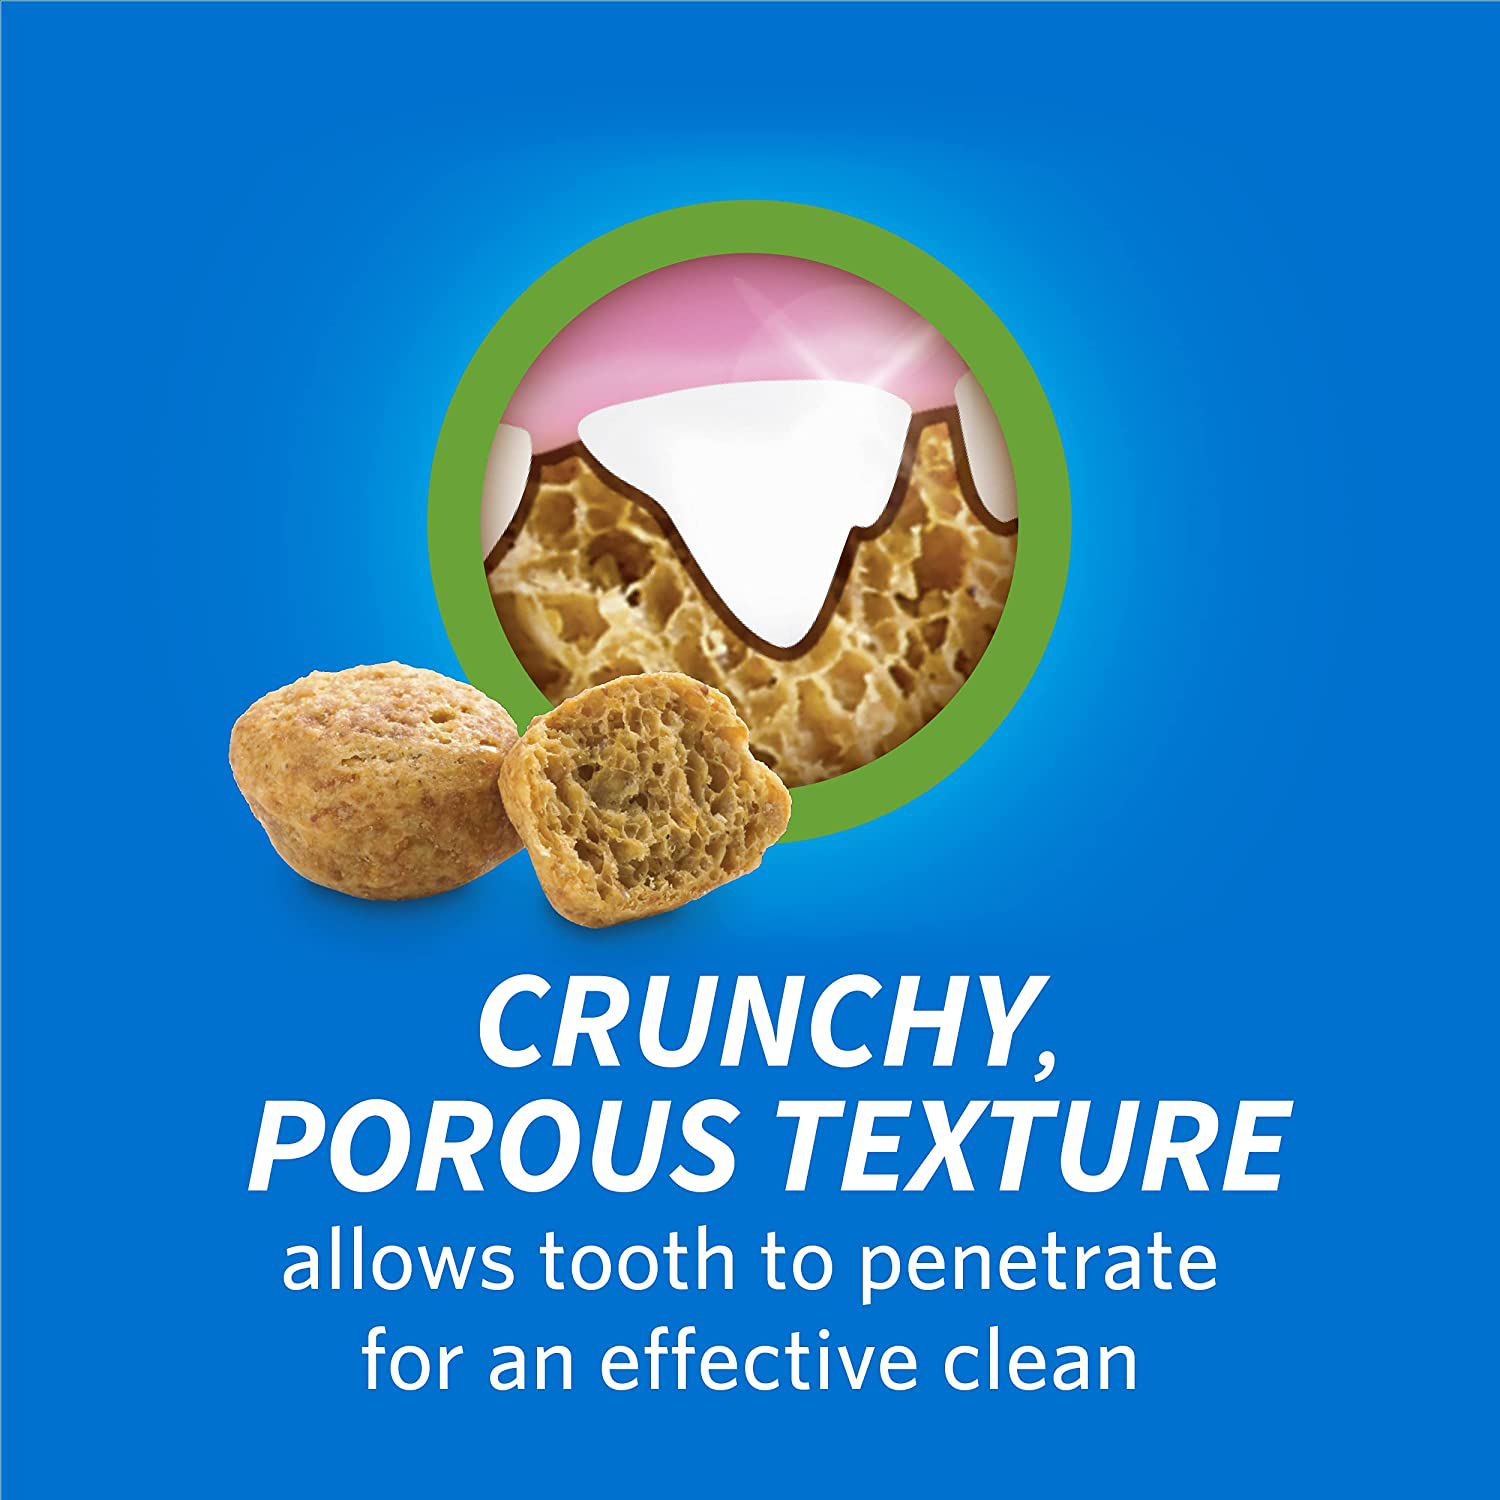 Purina Dentalife Made in USA Facilities Cat Dental Treats, Tasty Chicken Flavor - 19 Oz. Pouch